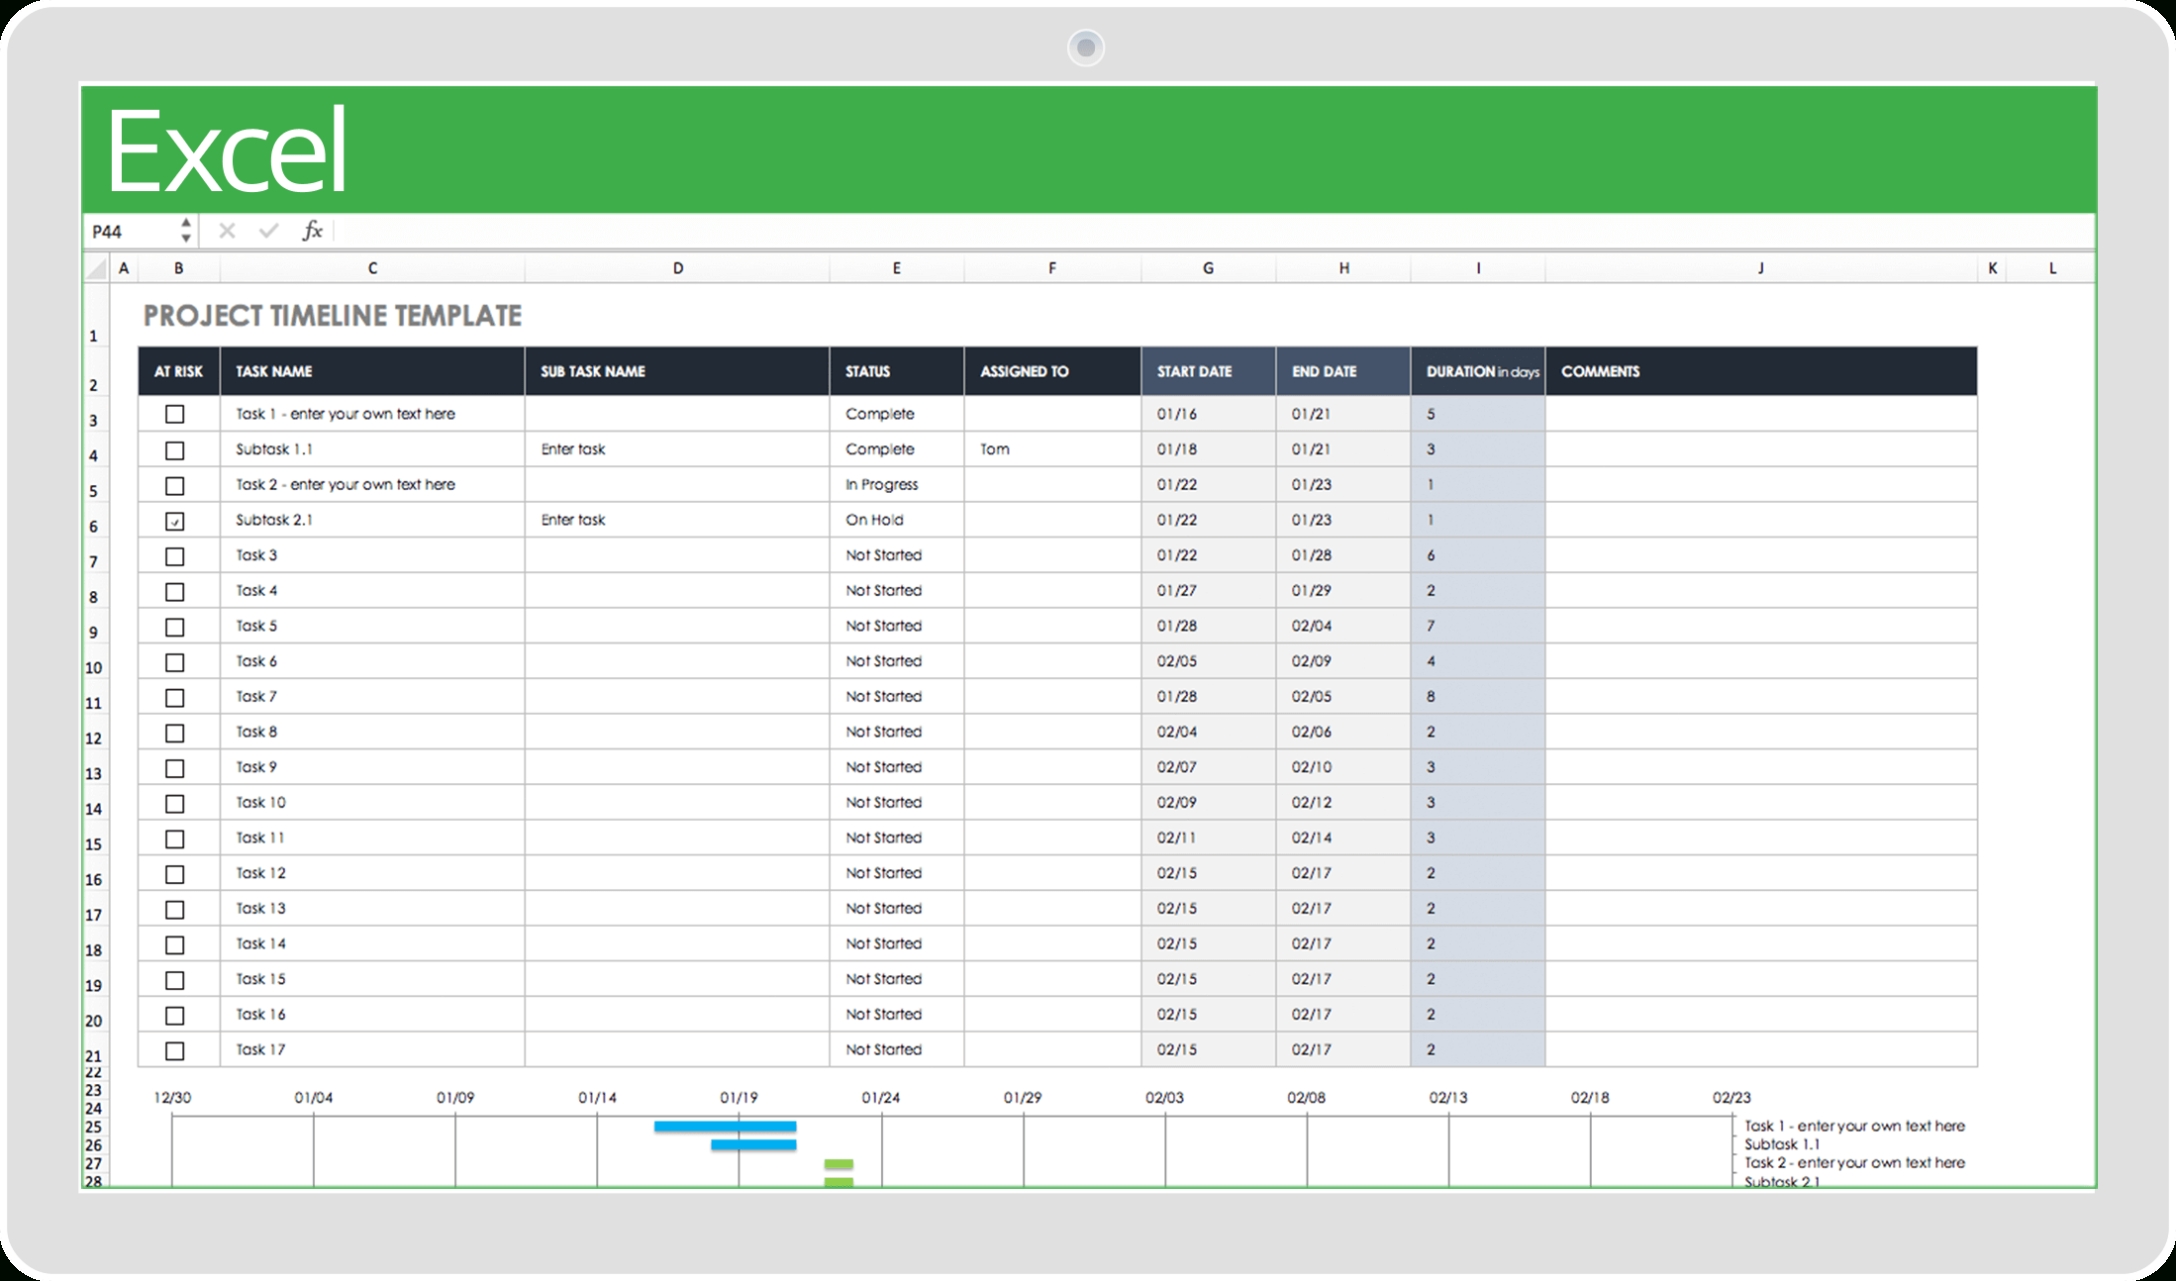 32 Free Excel Spreadsheet Templates | Smartsheet Inside Excel Spreadsheet Template For Small Business